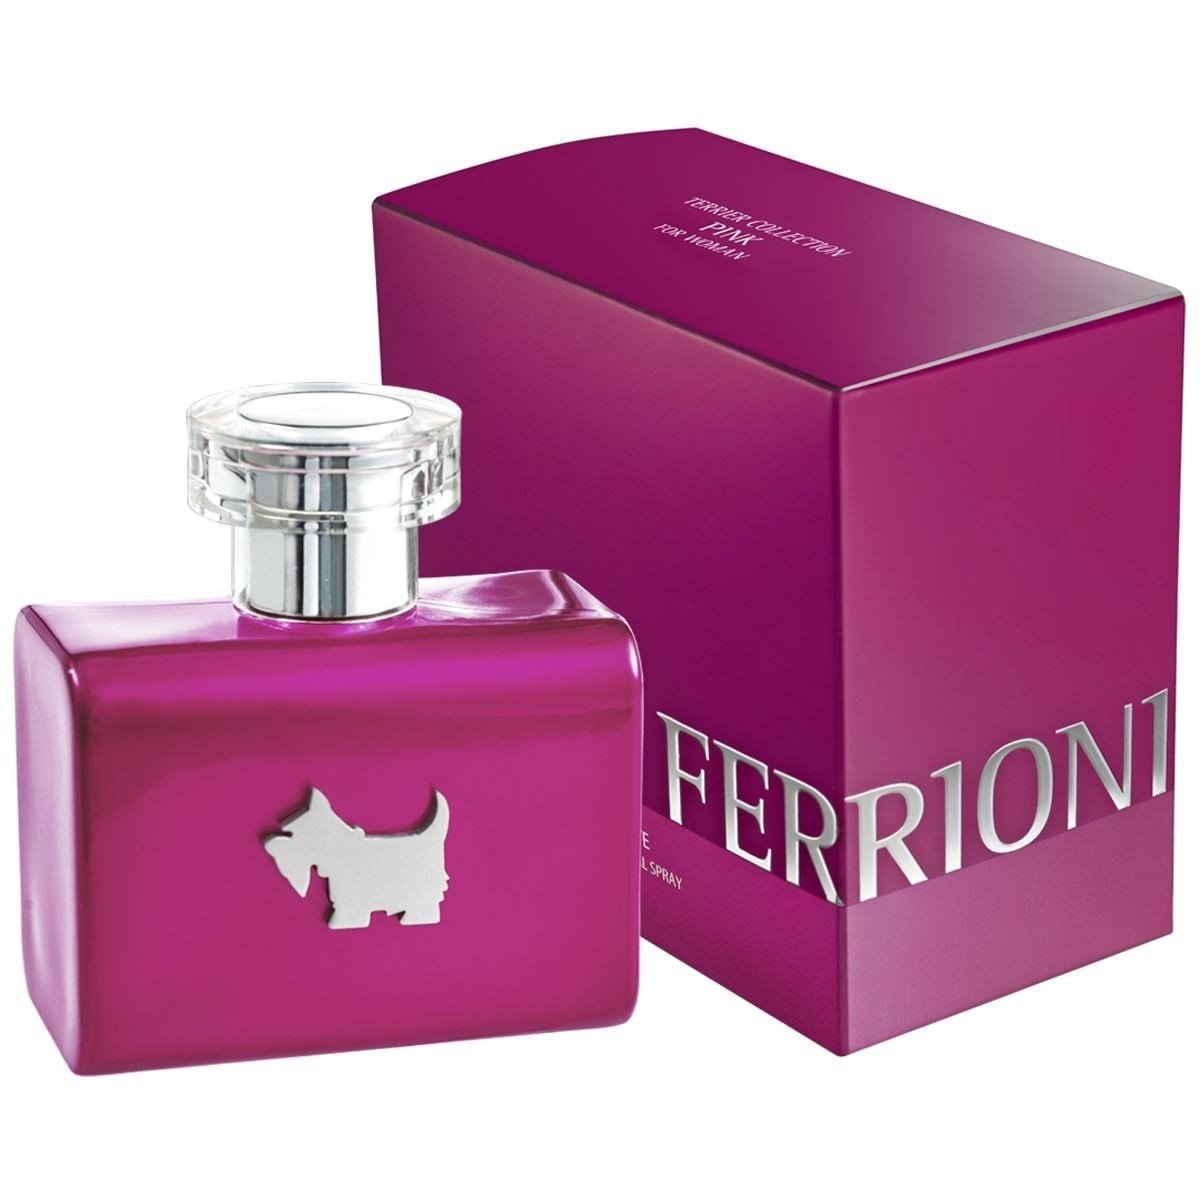 FERRIONI - Terrier Pink para mujer / 100 ml Eau De Toilette Spray